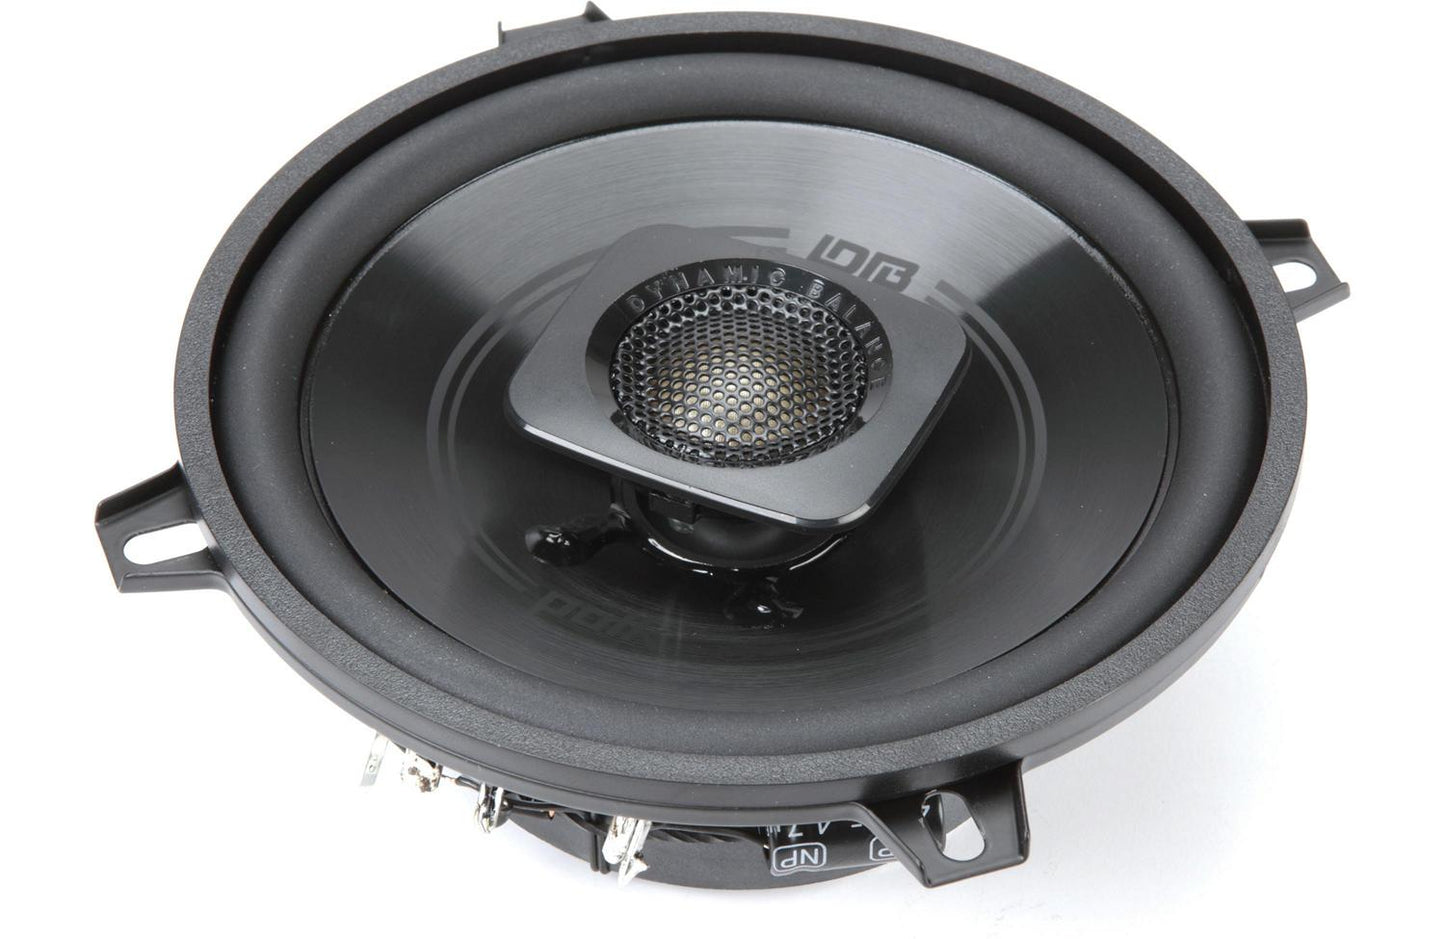 Polk Audio DB522 DB+ 5.25" Coaxial Speakers Marine Certified (100W RMS 300W Peak)